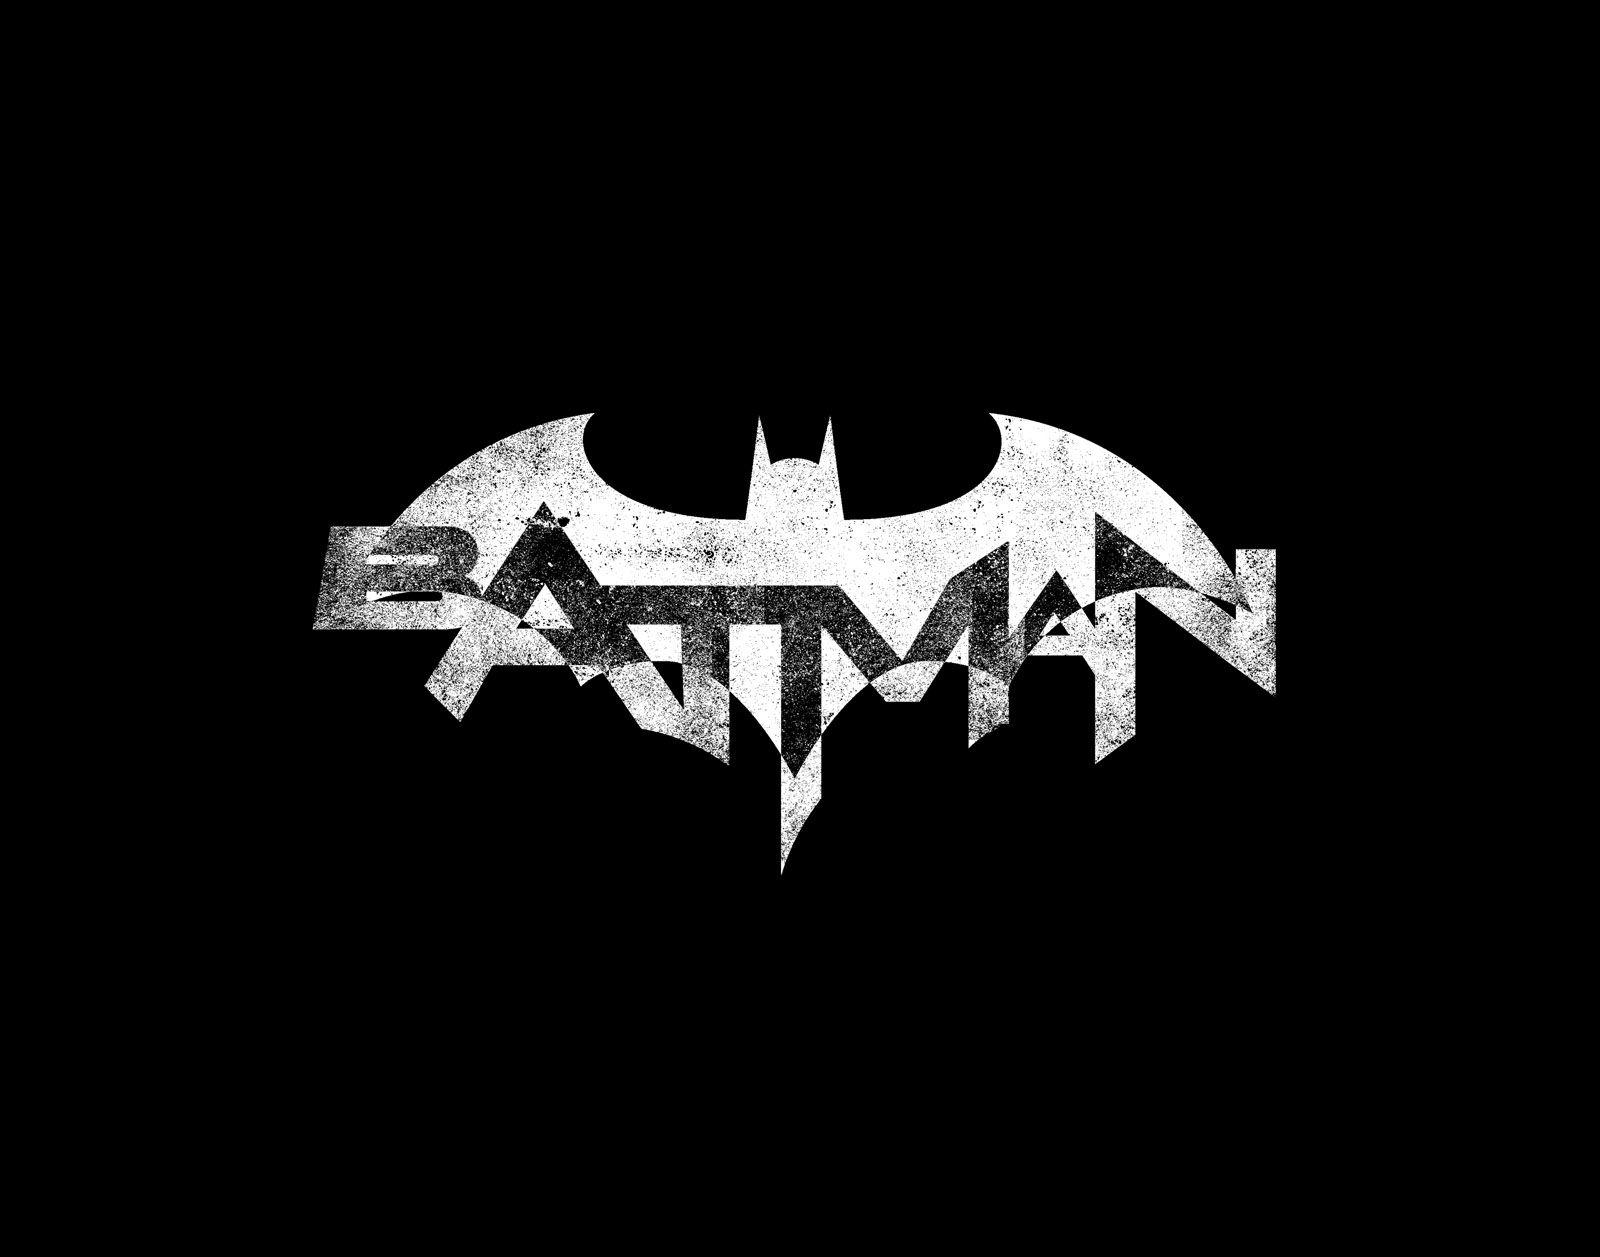 Broken Batman Logo - Best Batman- Jpg Jpeg Image 1600 images on Designspiration